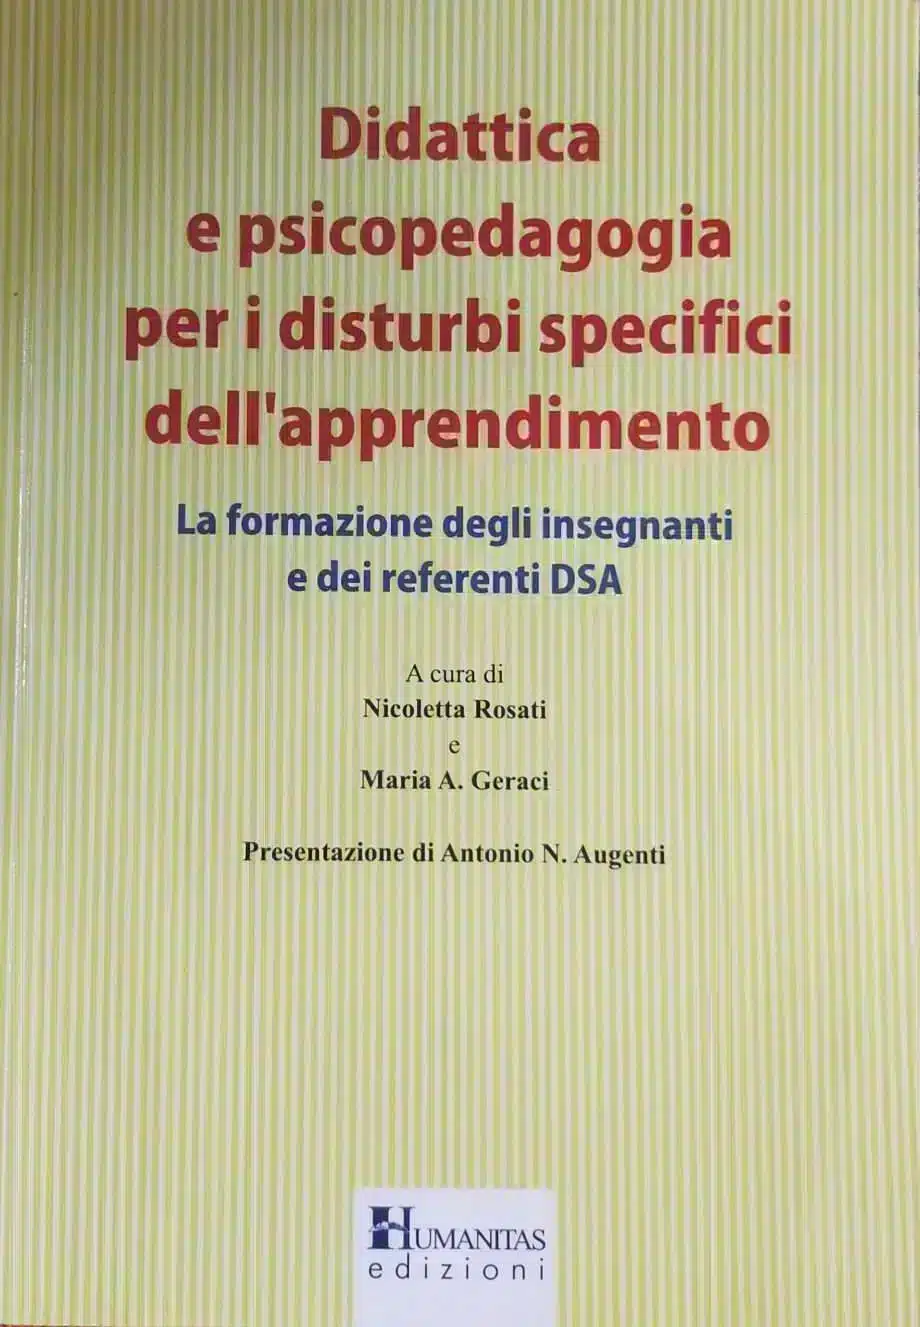 Maria A. Geraci, Maria A. Geraci, Cognitive Behavioral Play Therapy